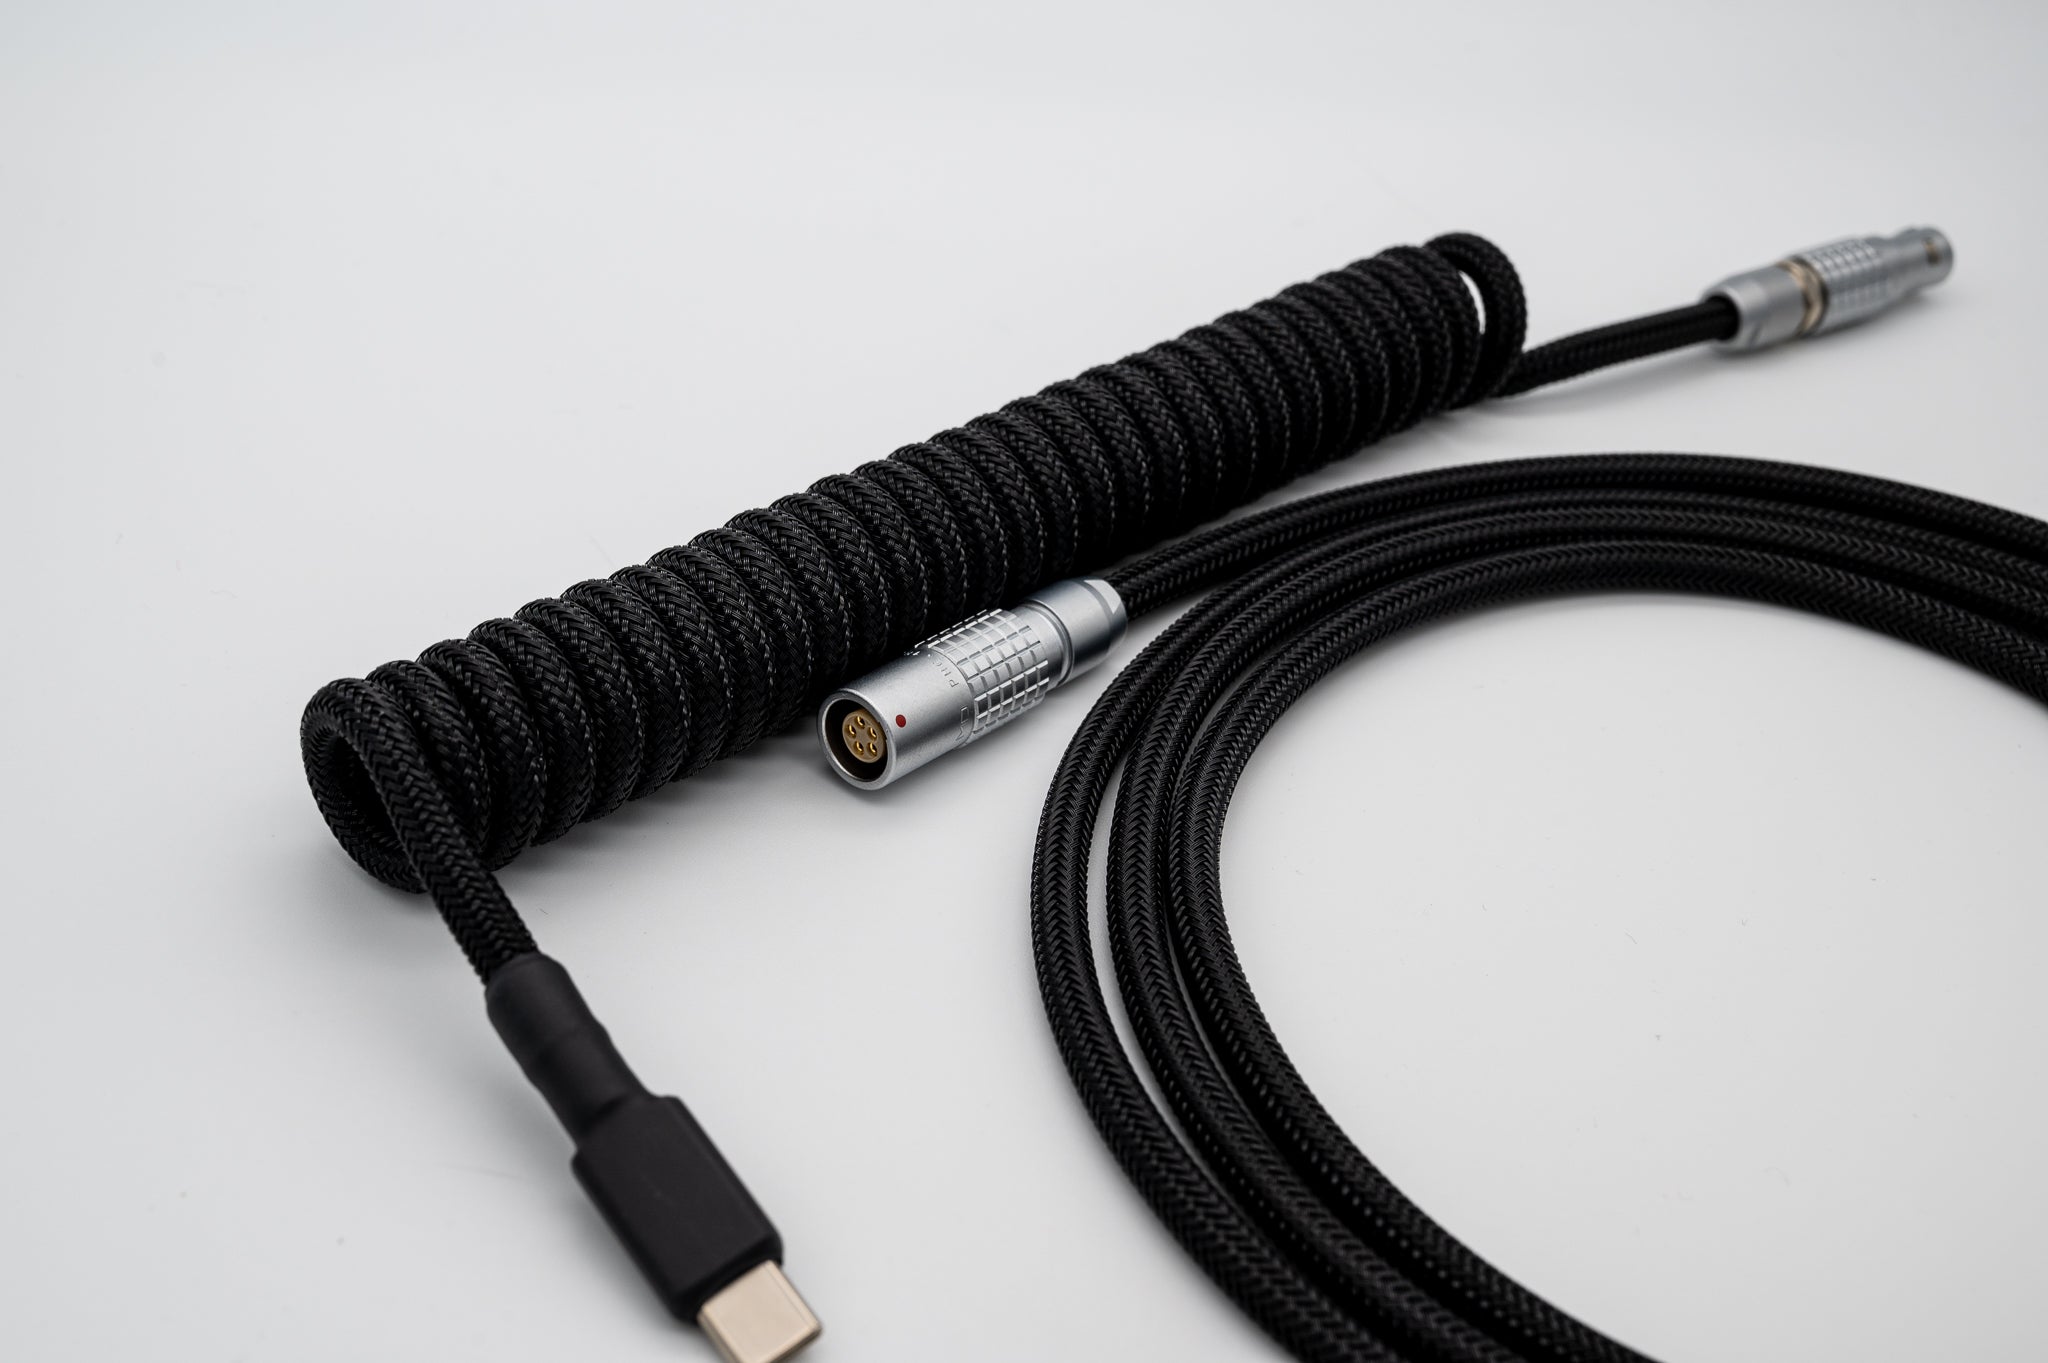 "Mono[chrome]" Custom USB Cable - Black